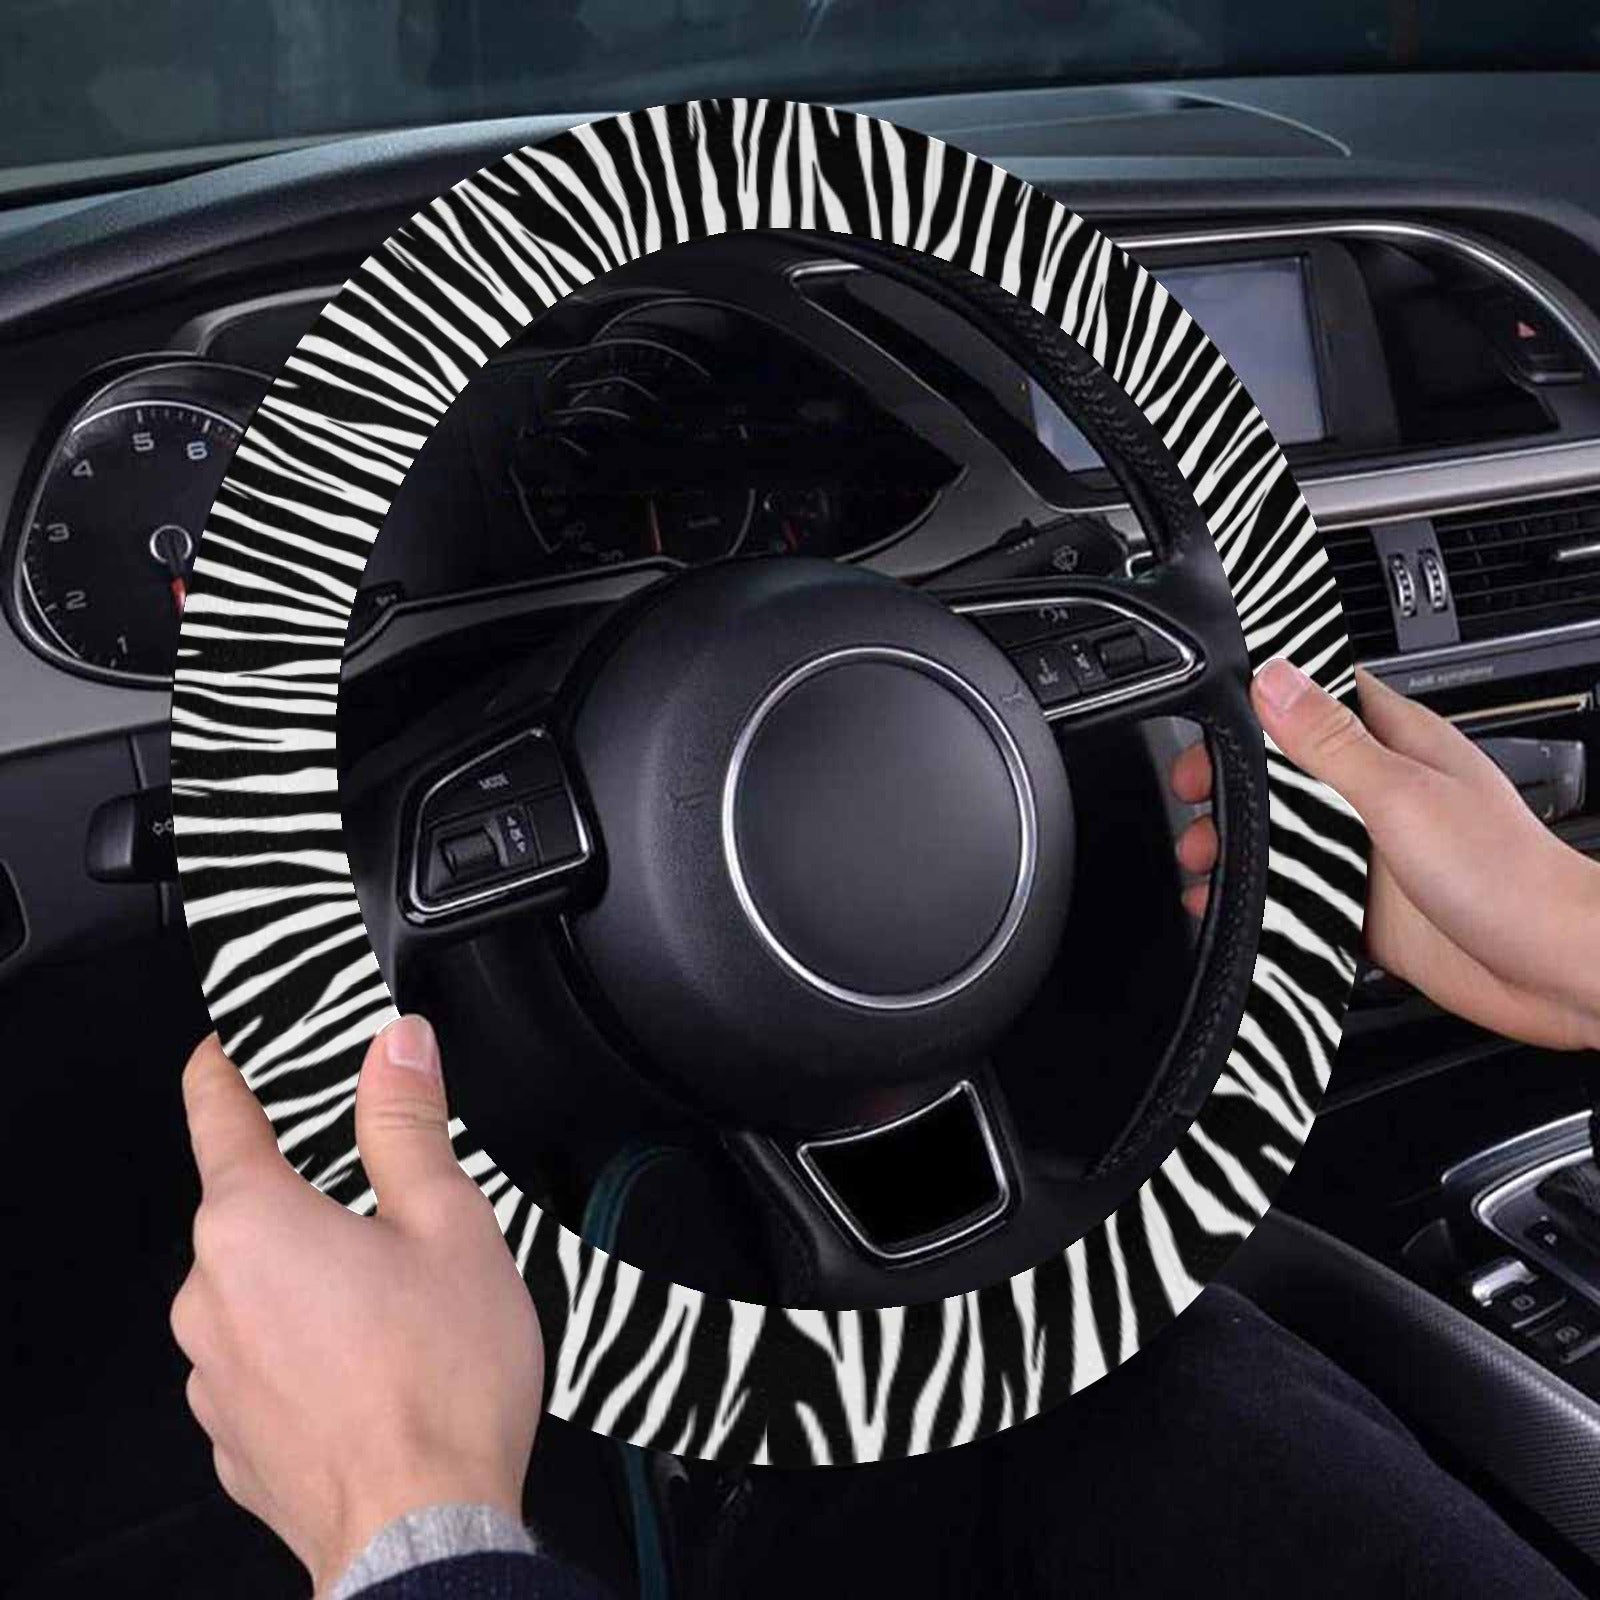 Zebra Steering Wheel Cover with Anti-Slip Insert, Black White Stripes Animal Print Car Auto Wrap Protector Women Men Accessories Starcove Fashion